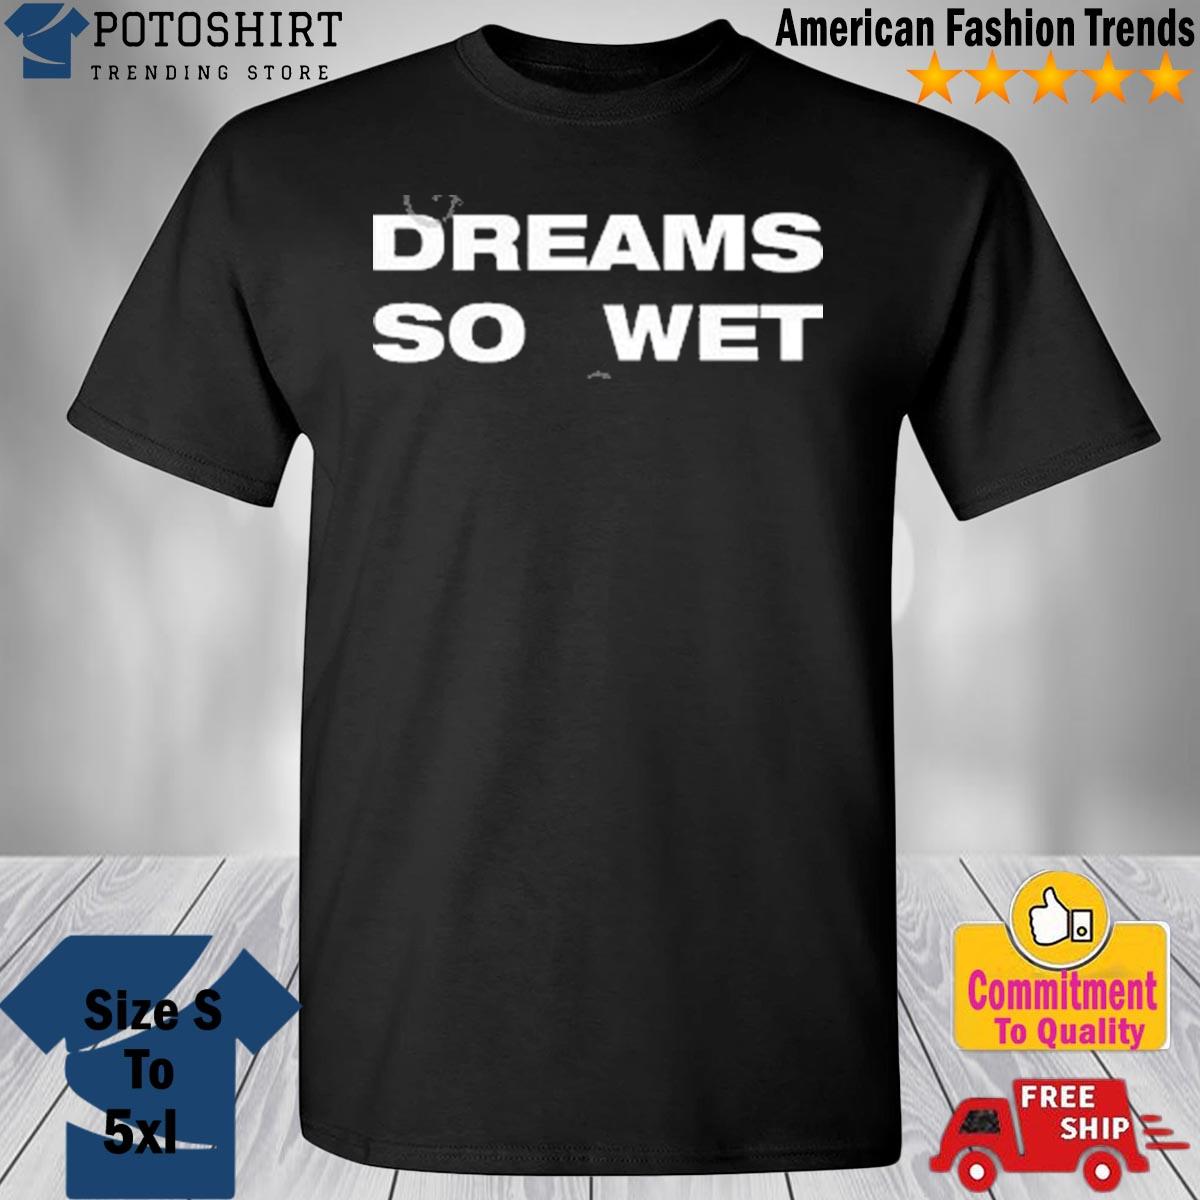 Product erika jayne wears dreams so wet shirt